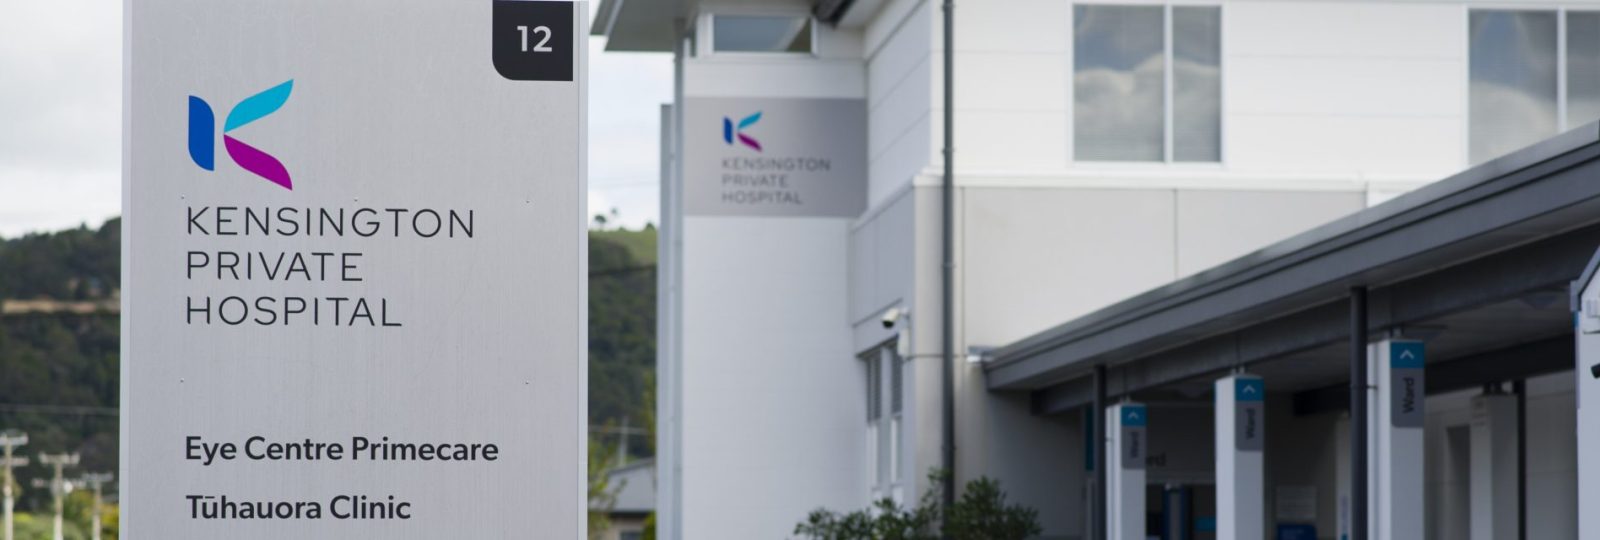 Kensington Private Hospital - Banner Image